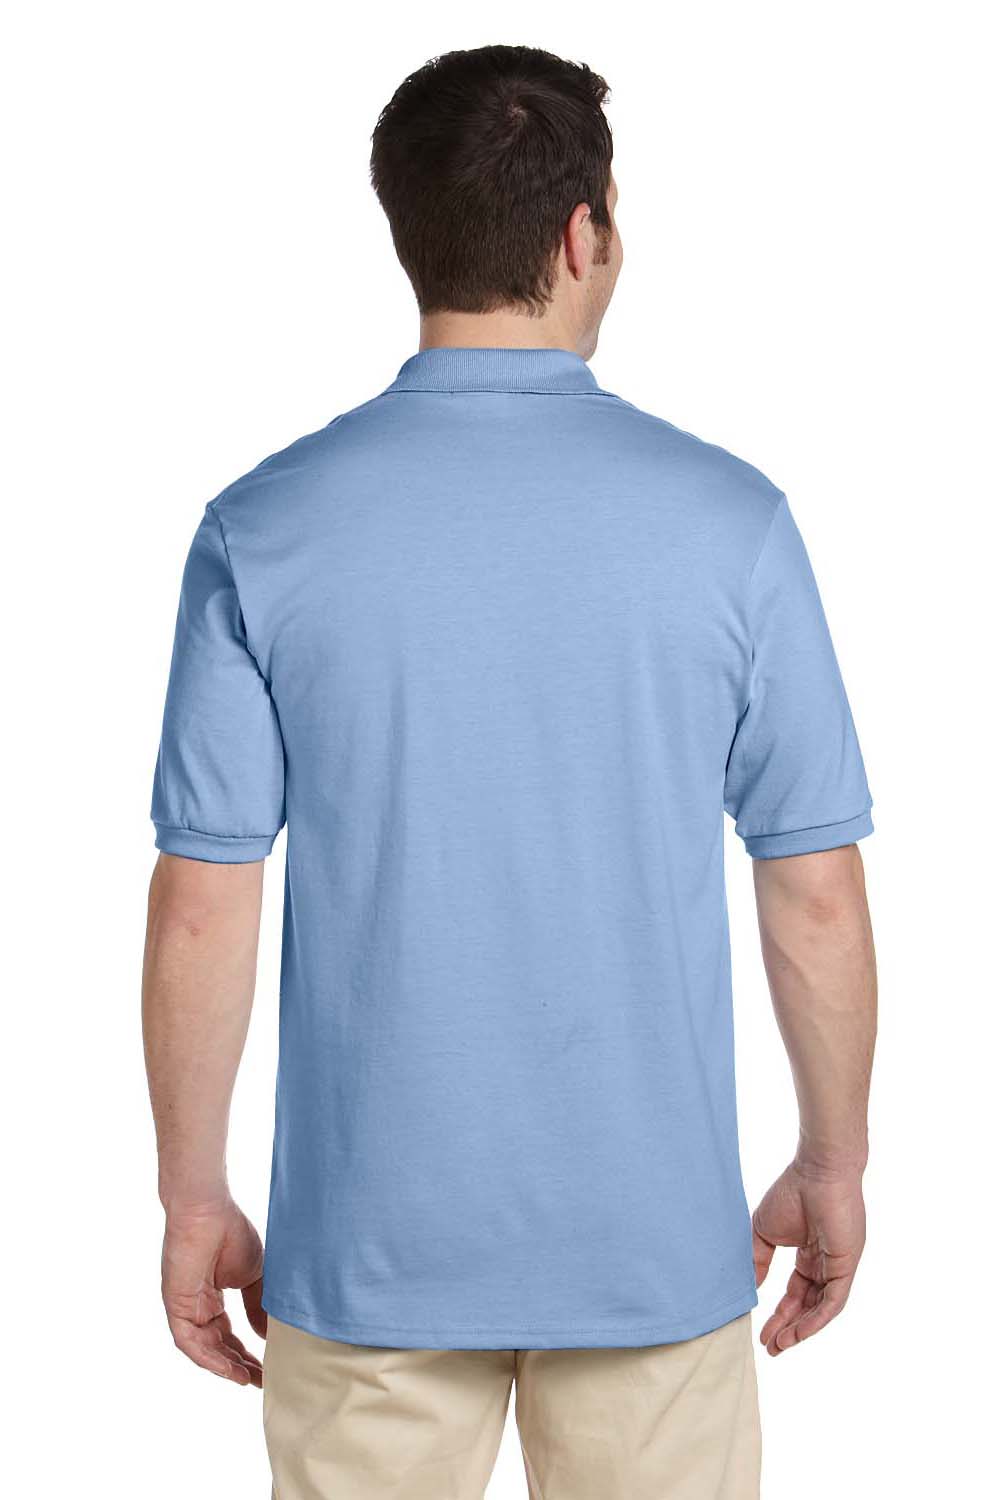 Jerzees 437 Mens SpotShield Stain Resistant Short Sleeve Polo Shirt Light Blue Back